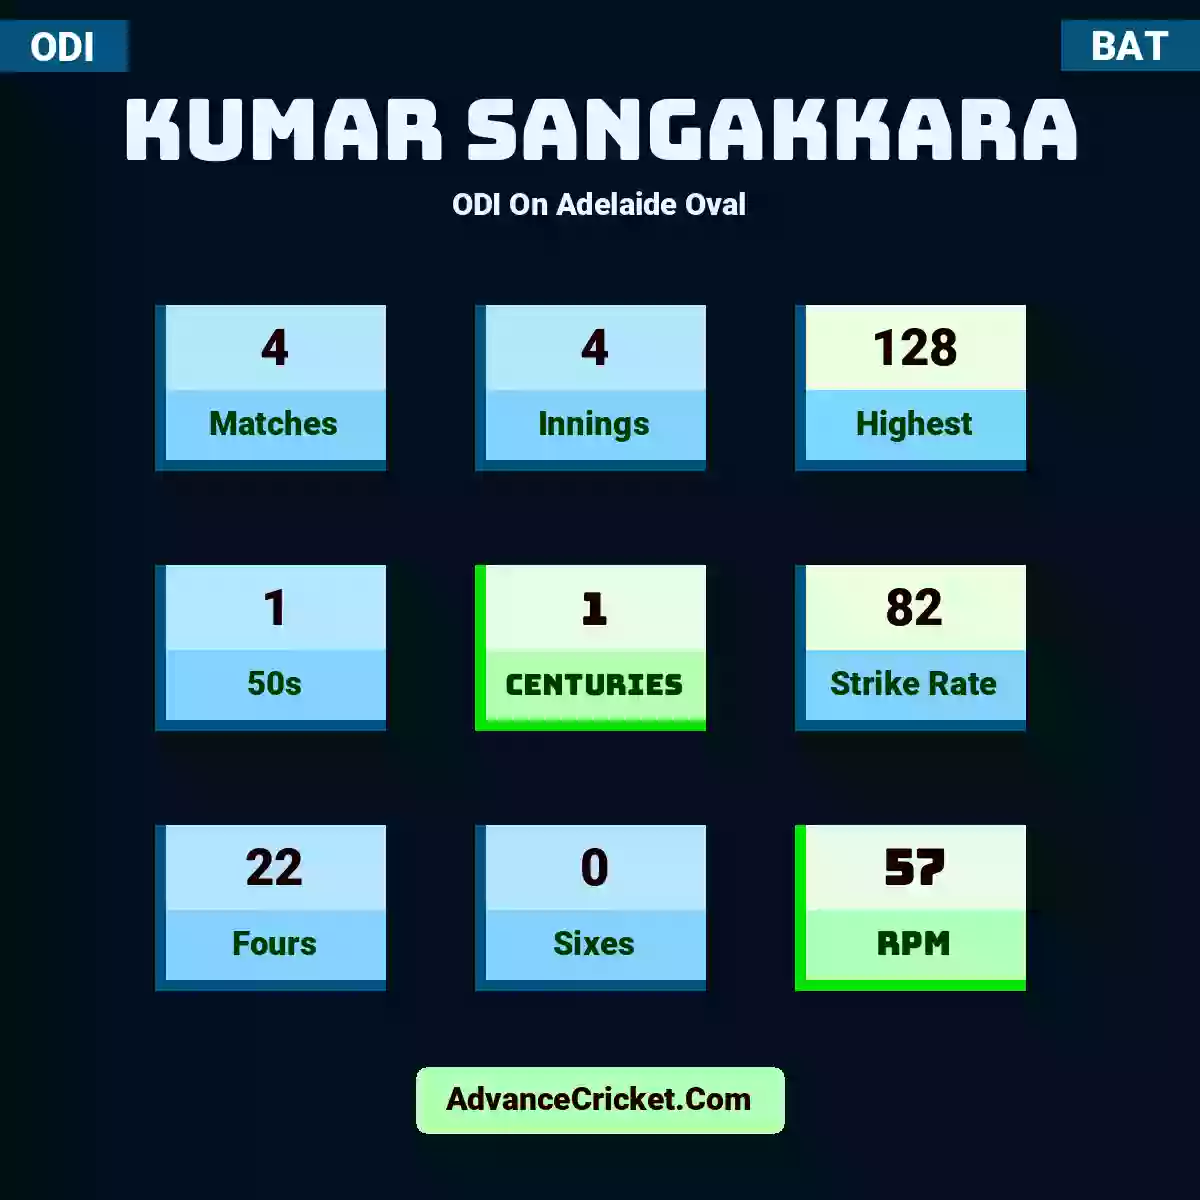 Kumar Sangakkara ODI  On Adelaide Oval, Kumar Sangakkara played 4 matches, scored 128 runs as highest, 1 half-centuries, and 1 centuries, with a strike rate of 82. K.Sangakkara hit 22 fours and 0 sixes, with an RPM of 57.